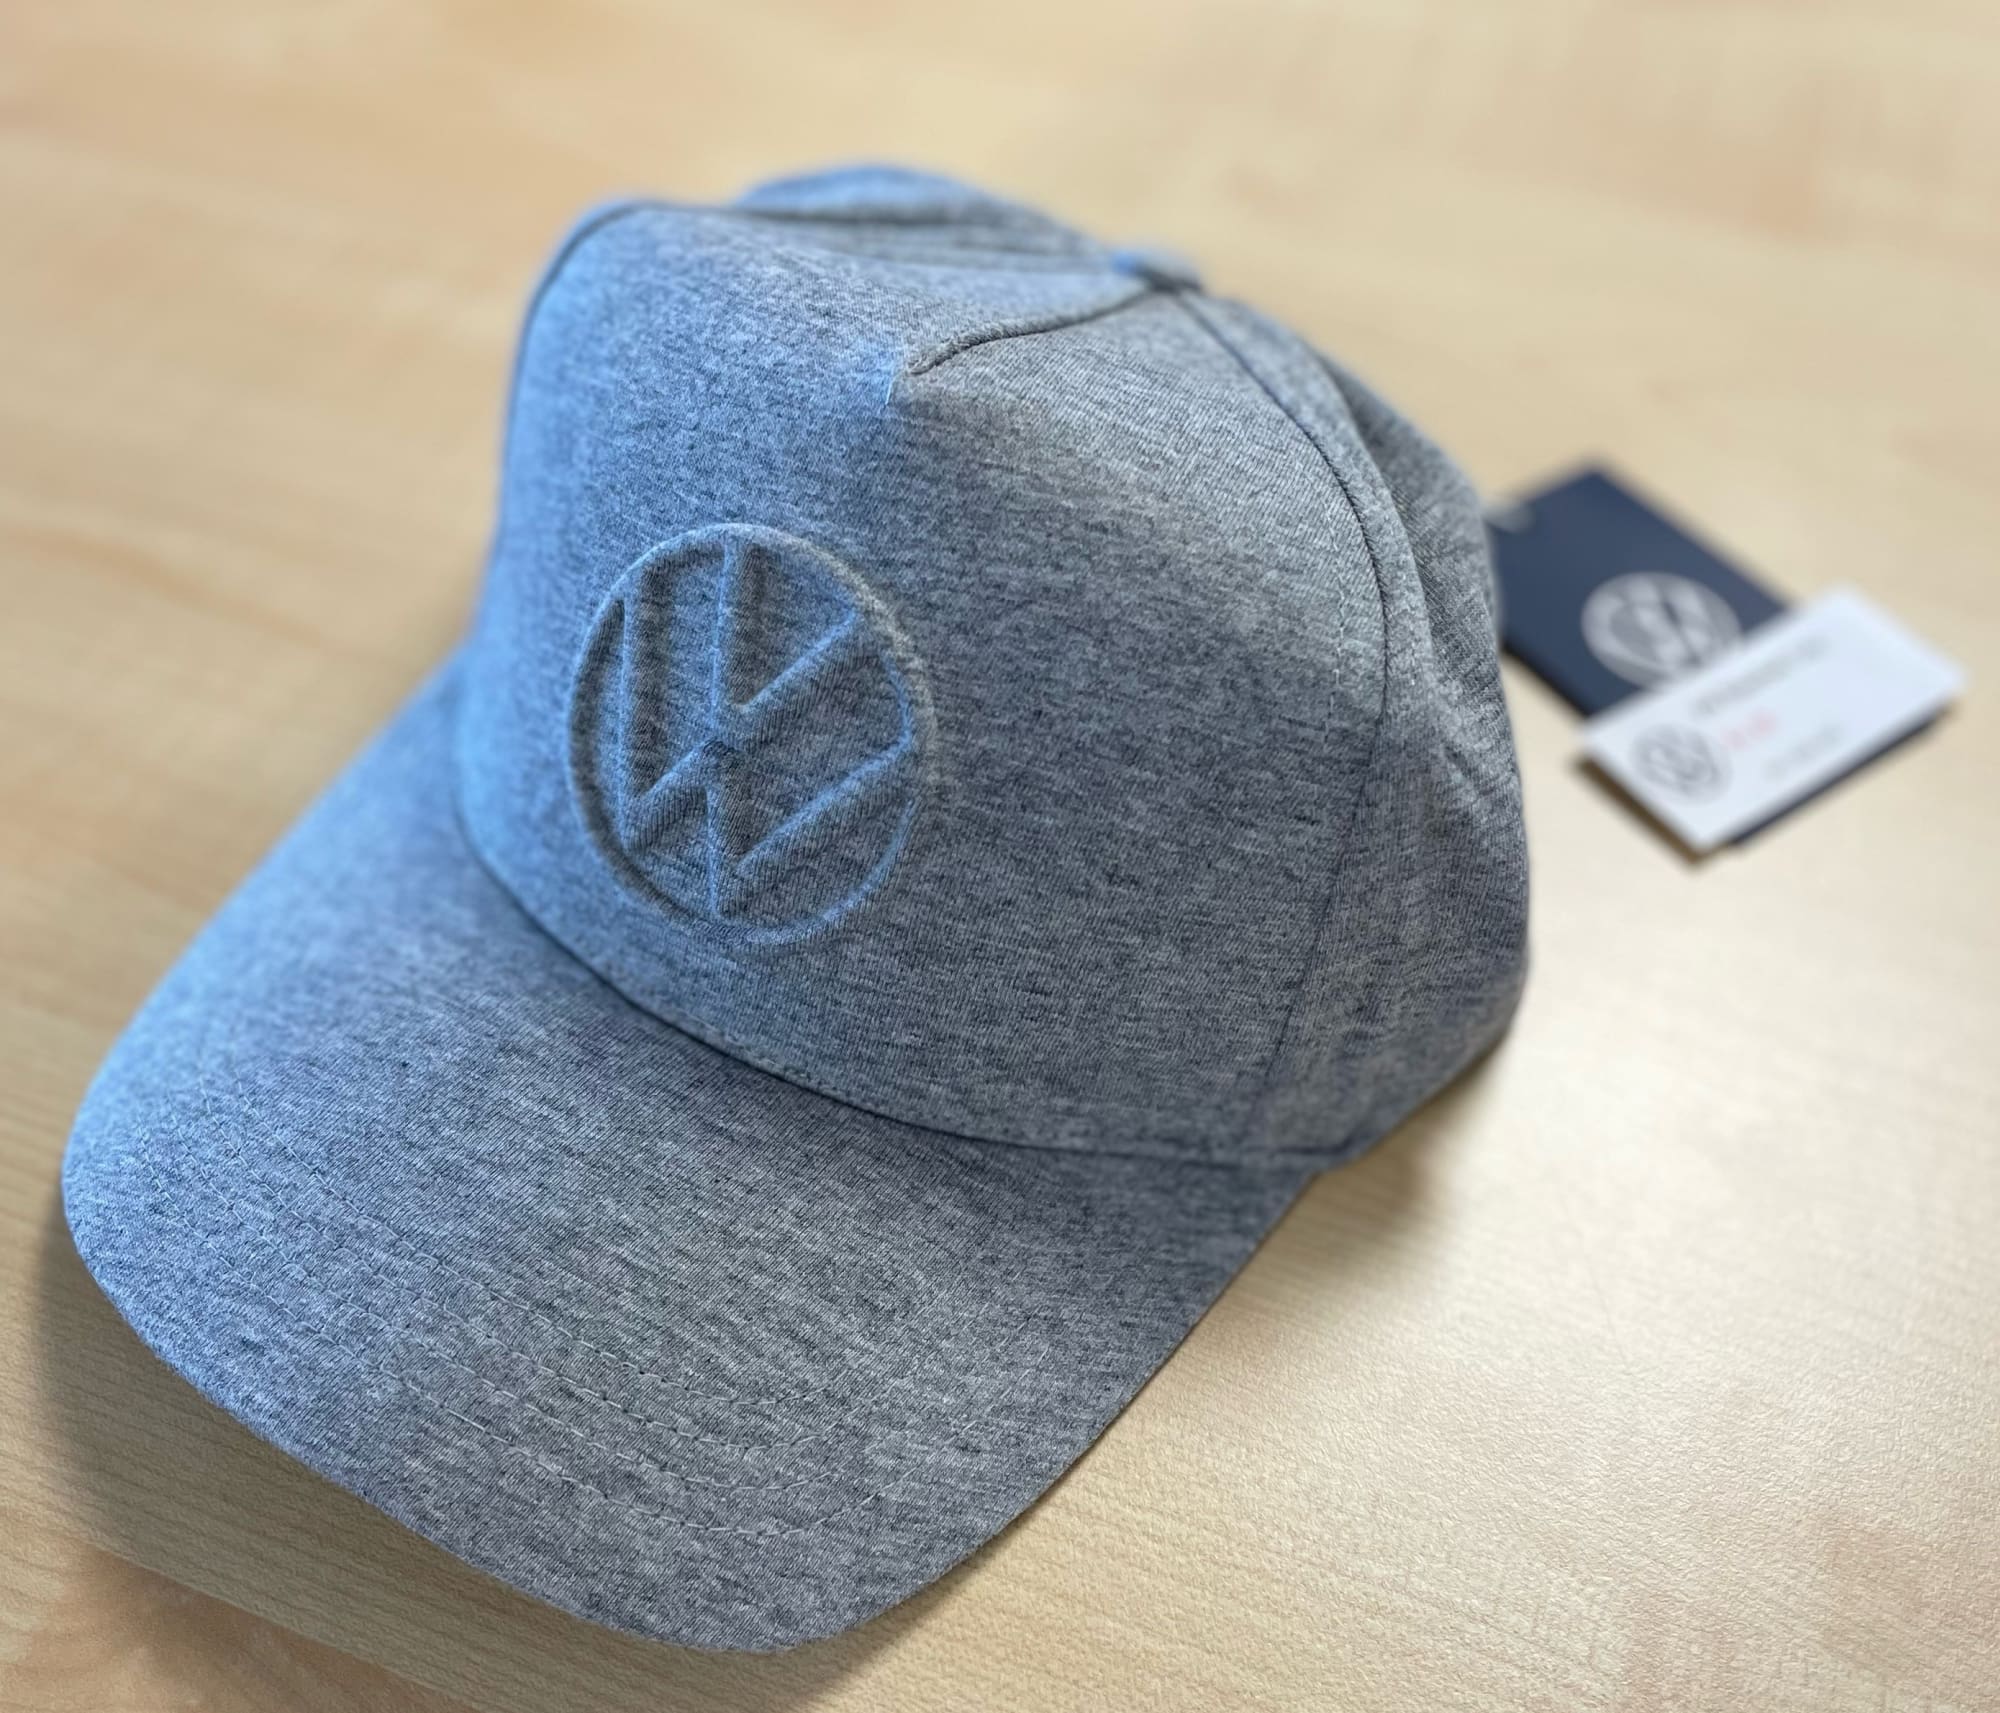 VW Cap